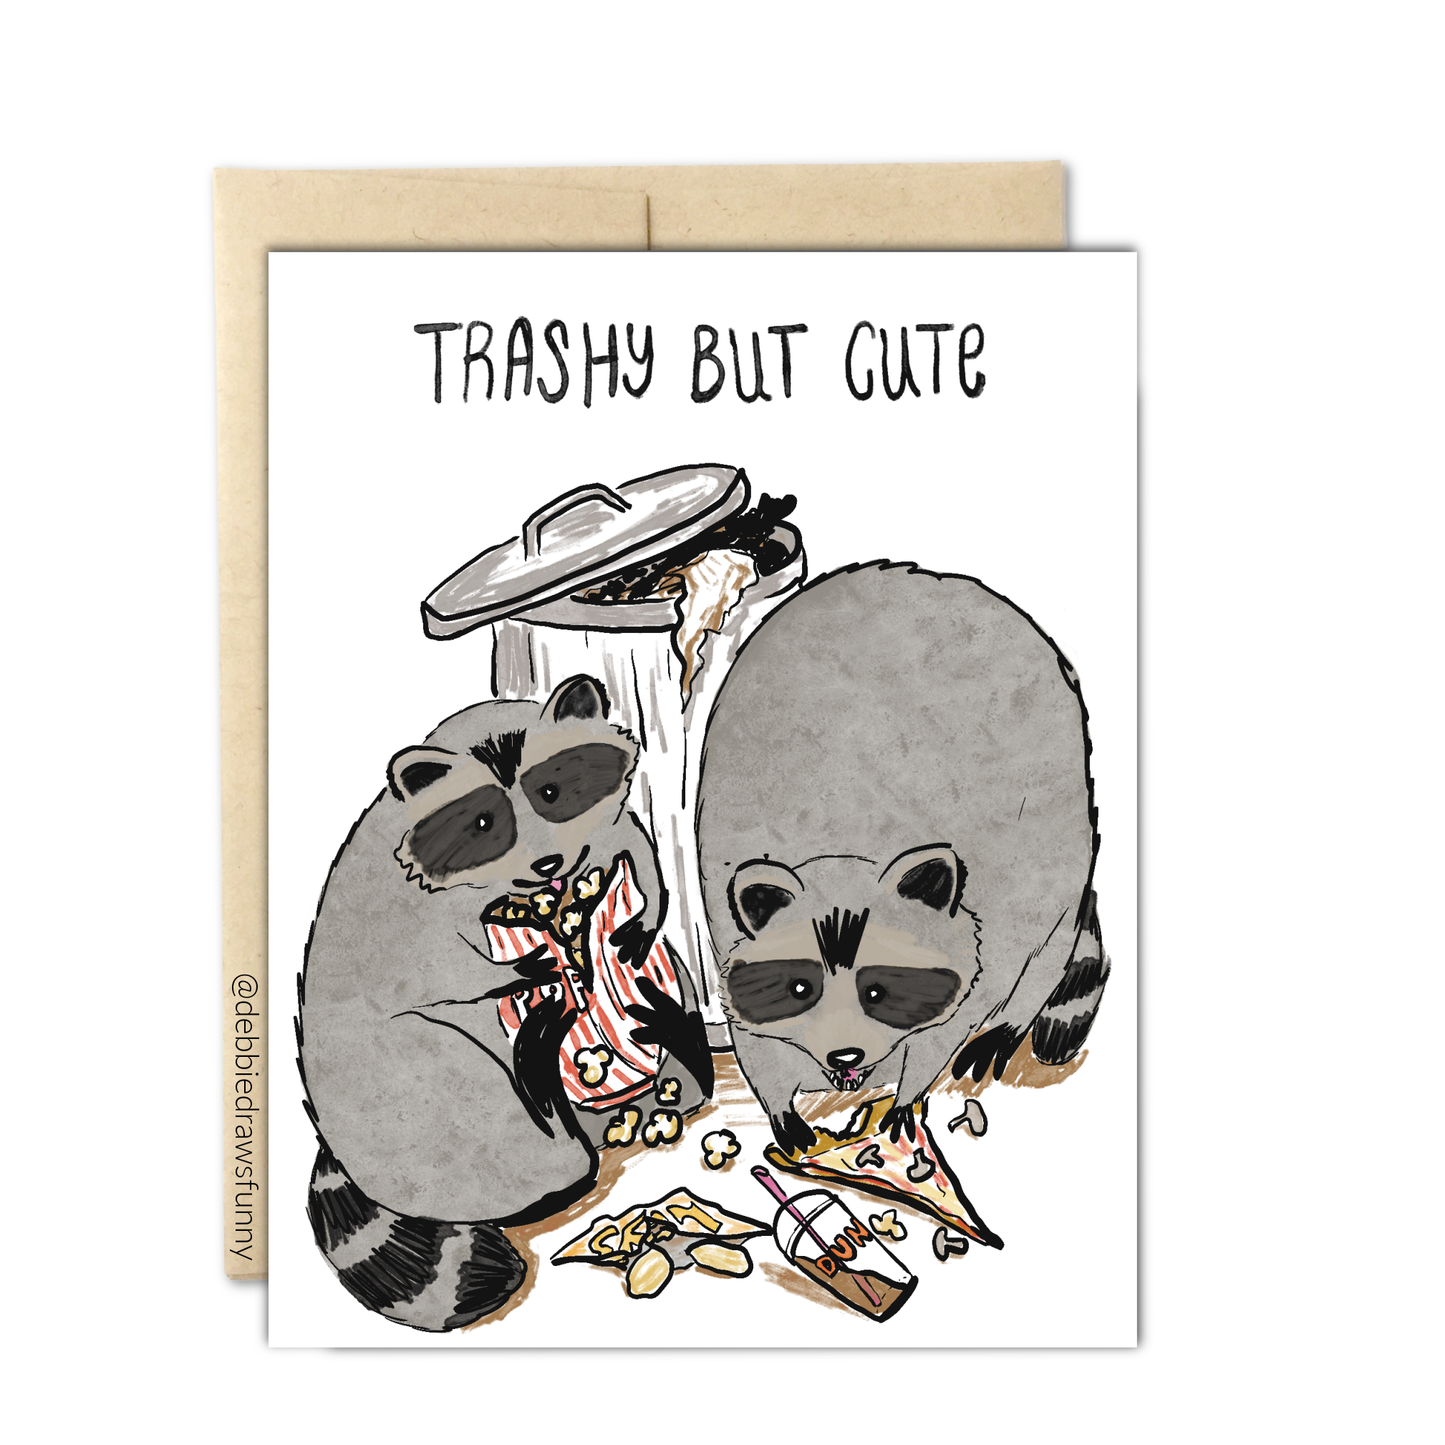 NEW Trashy but Cute Raccoons funny everyday friendship card